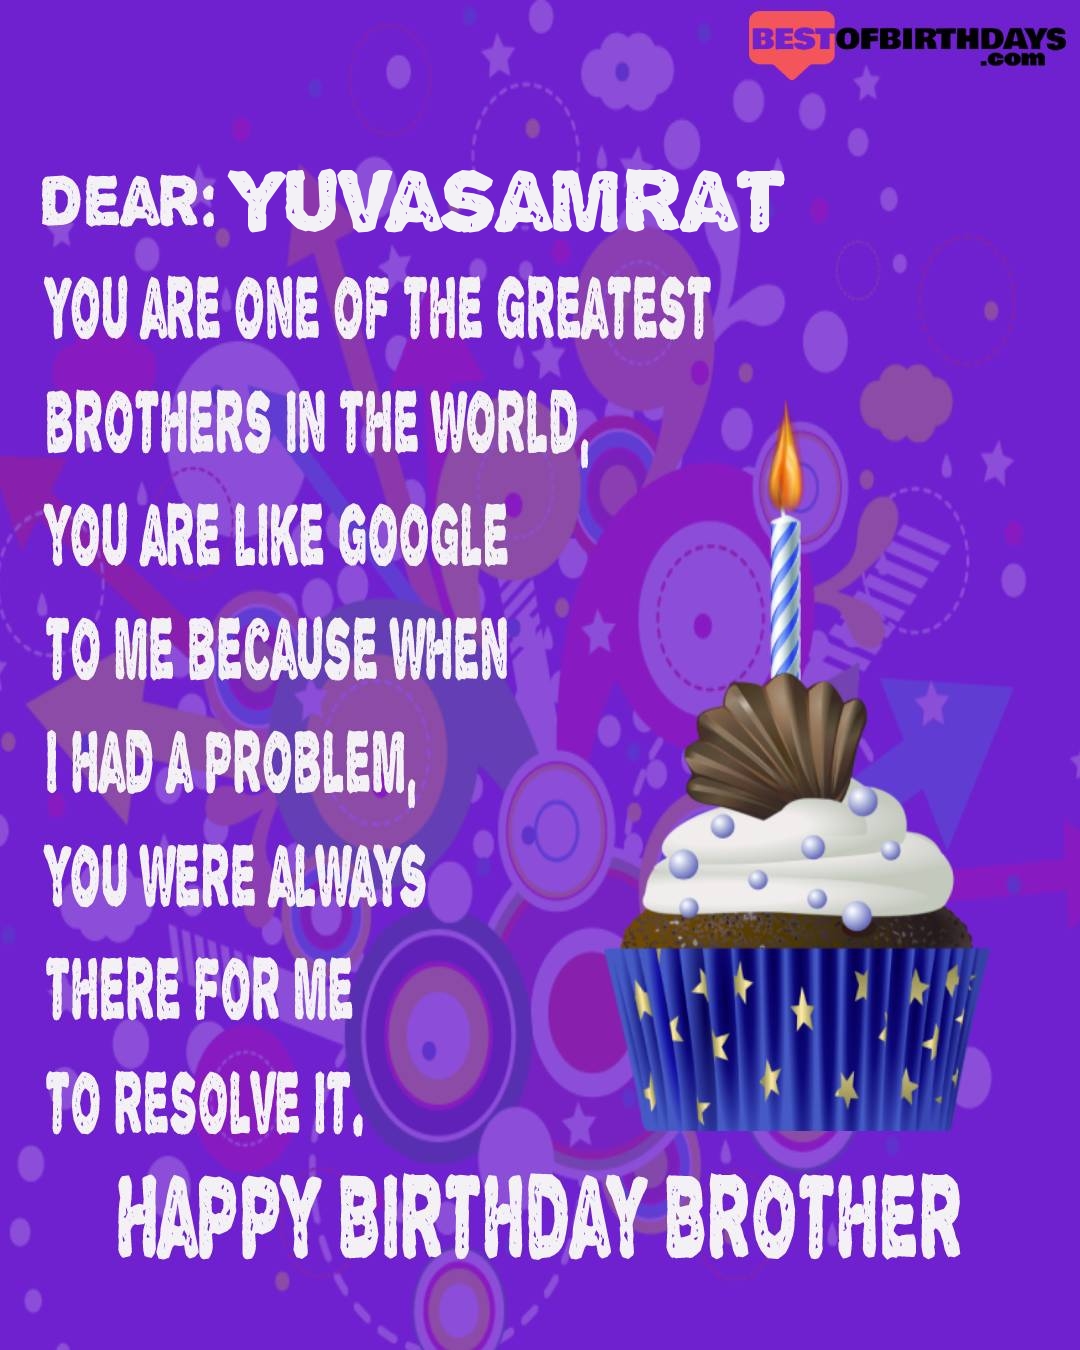 Happy birthday yuvasamrat bhai brother bro